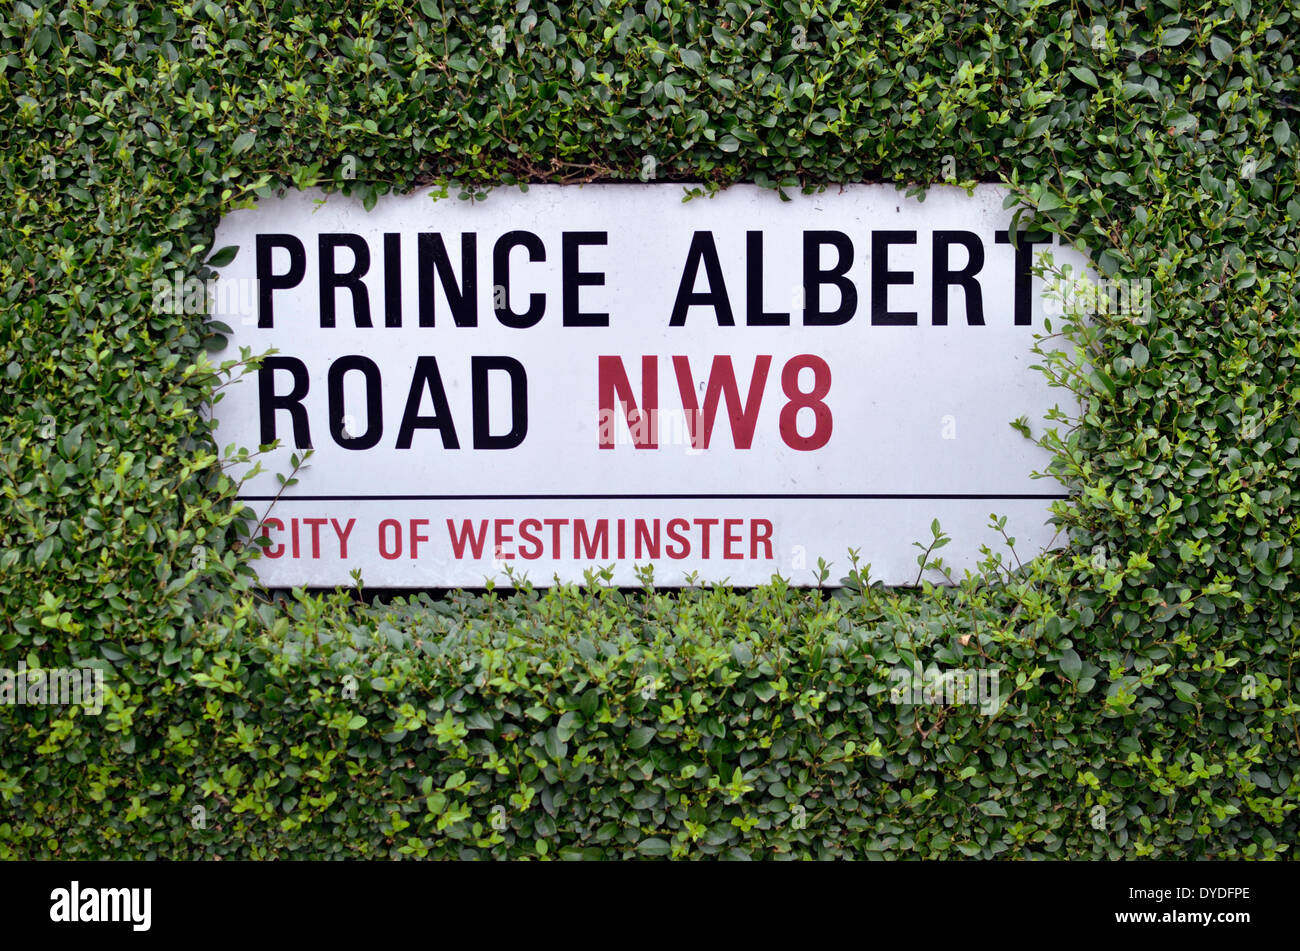 Prince Albert Road NW8 street sign. Stock Photo